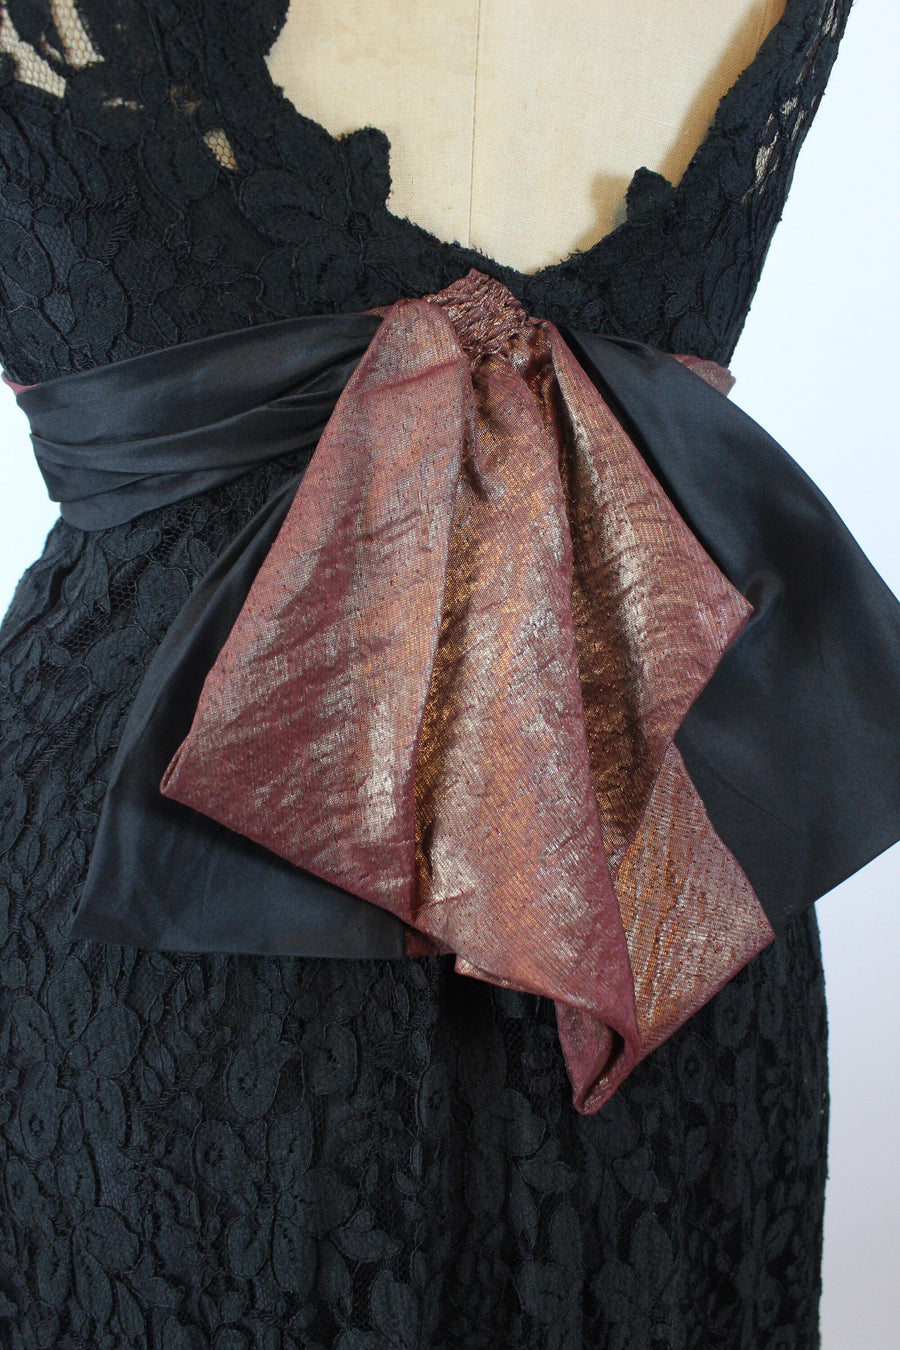 1920s BLACK LACE dress and bolero xs | new winter